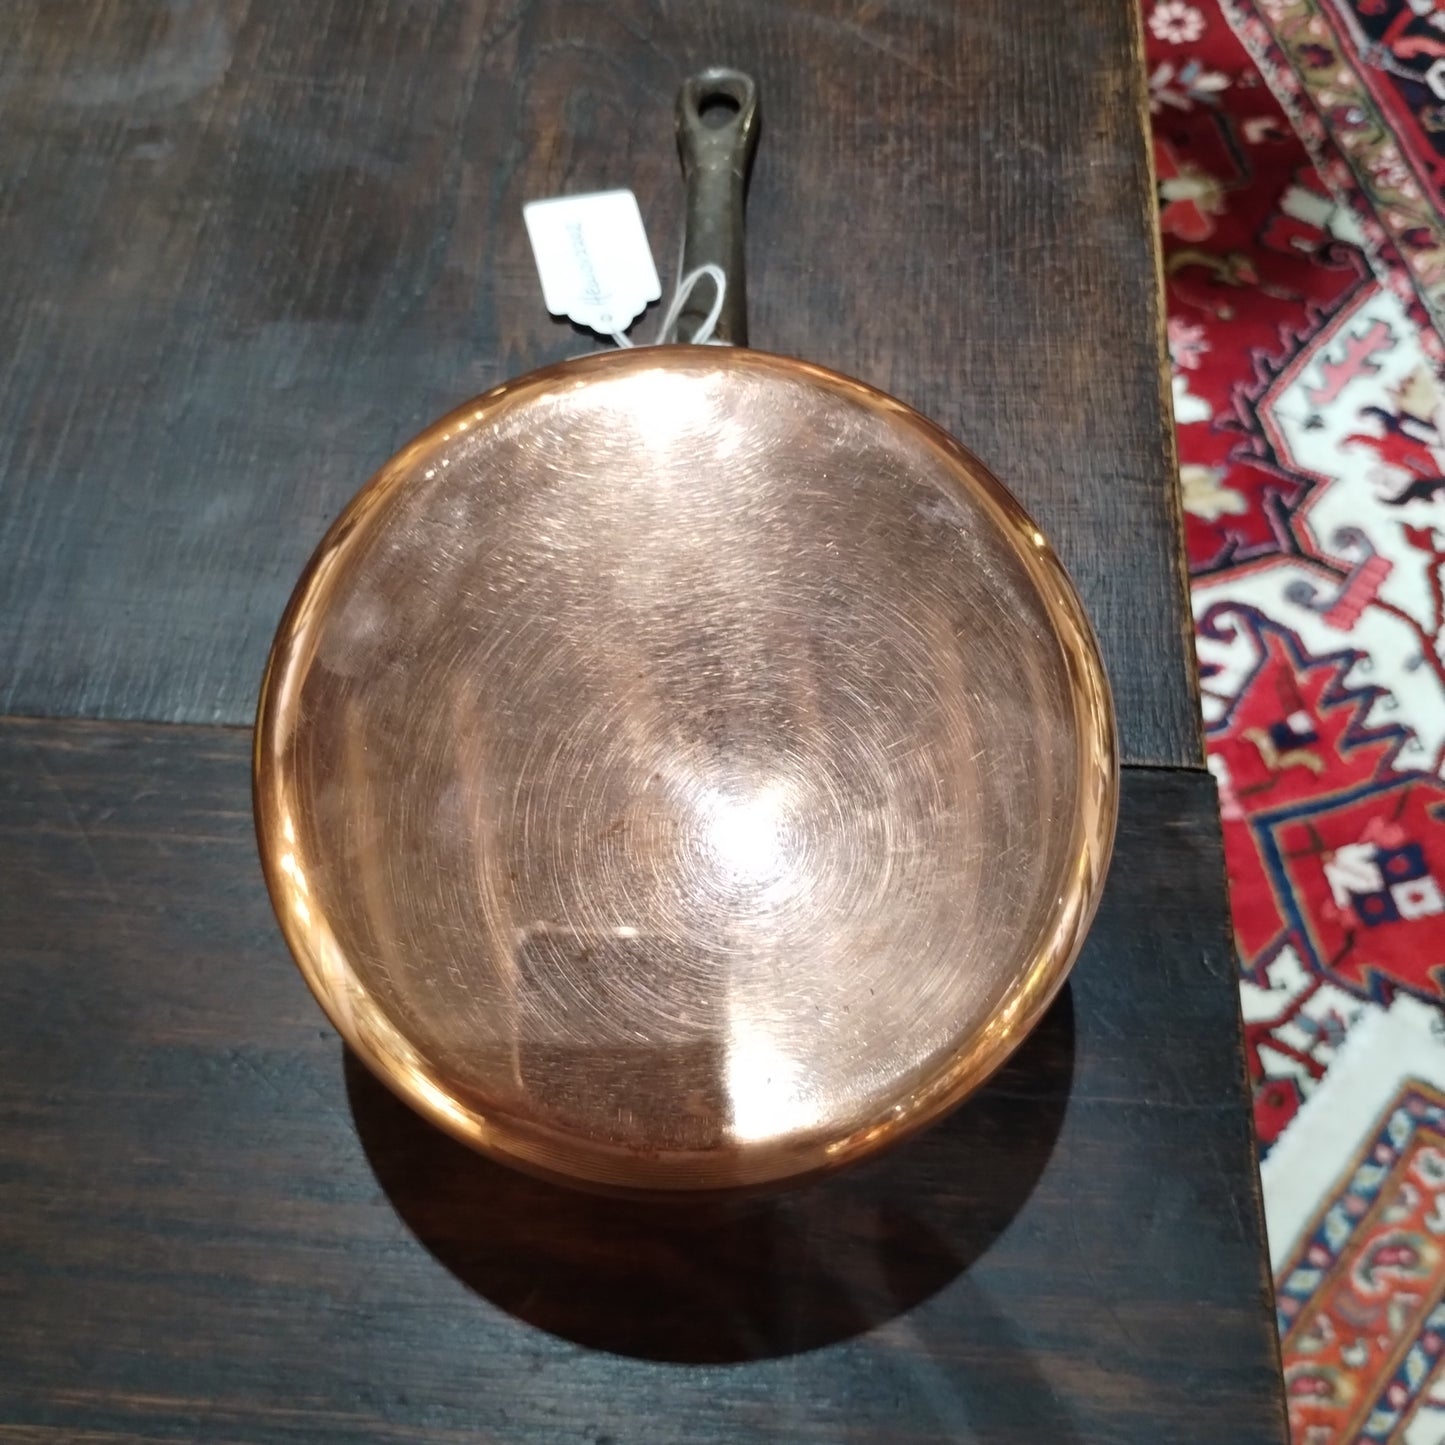 Copper 6" pan